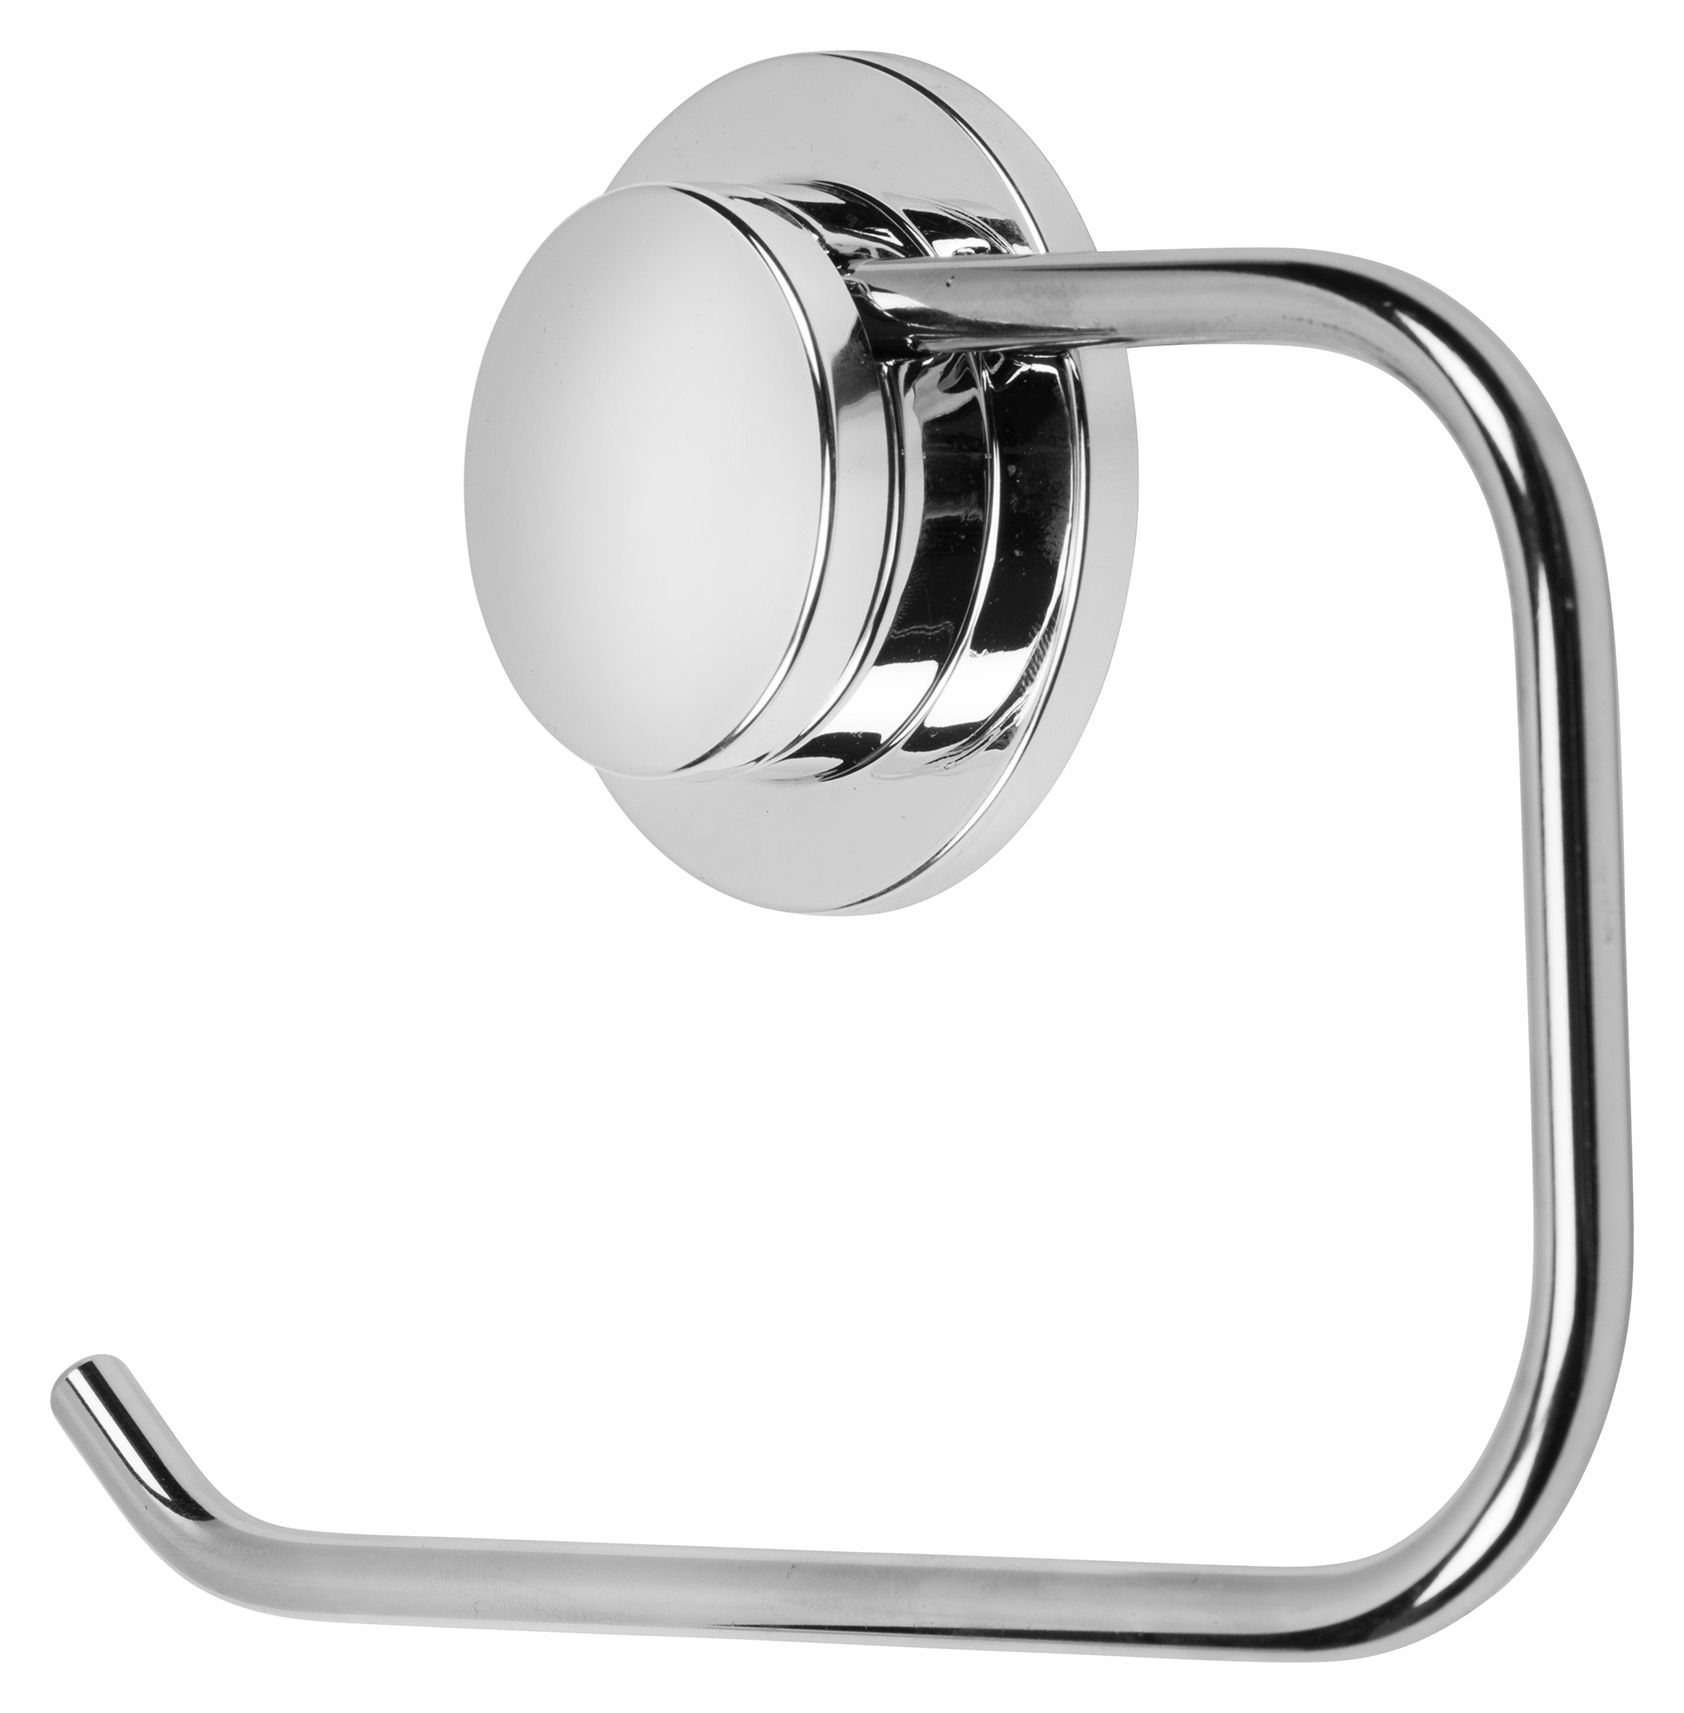 Image of Croydex Stick 'n' Lock™ Toilet Roll Holder - Chrome